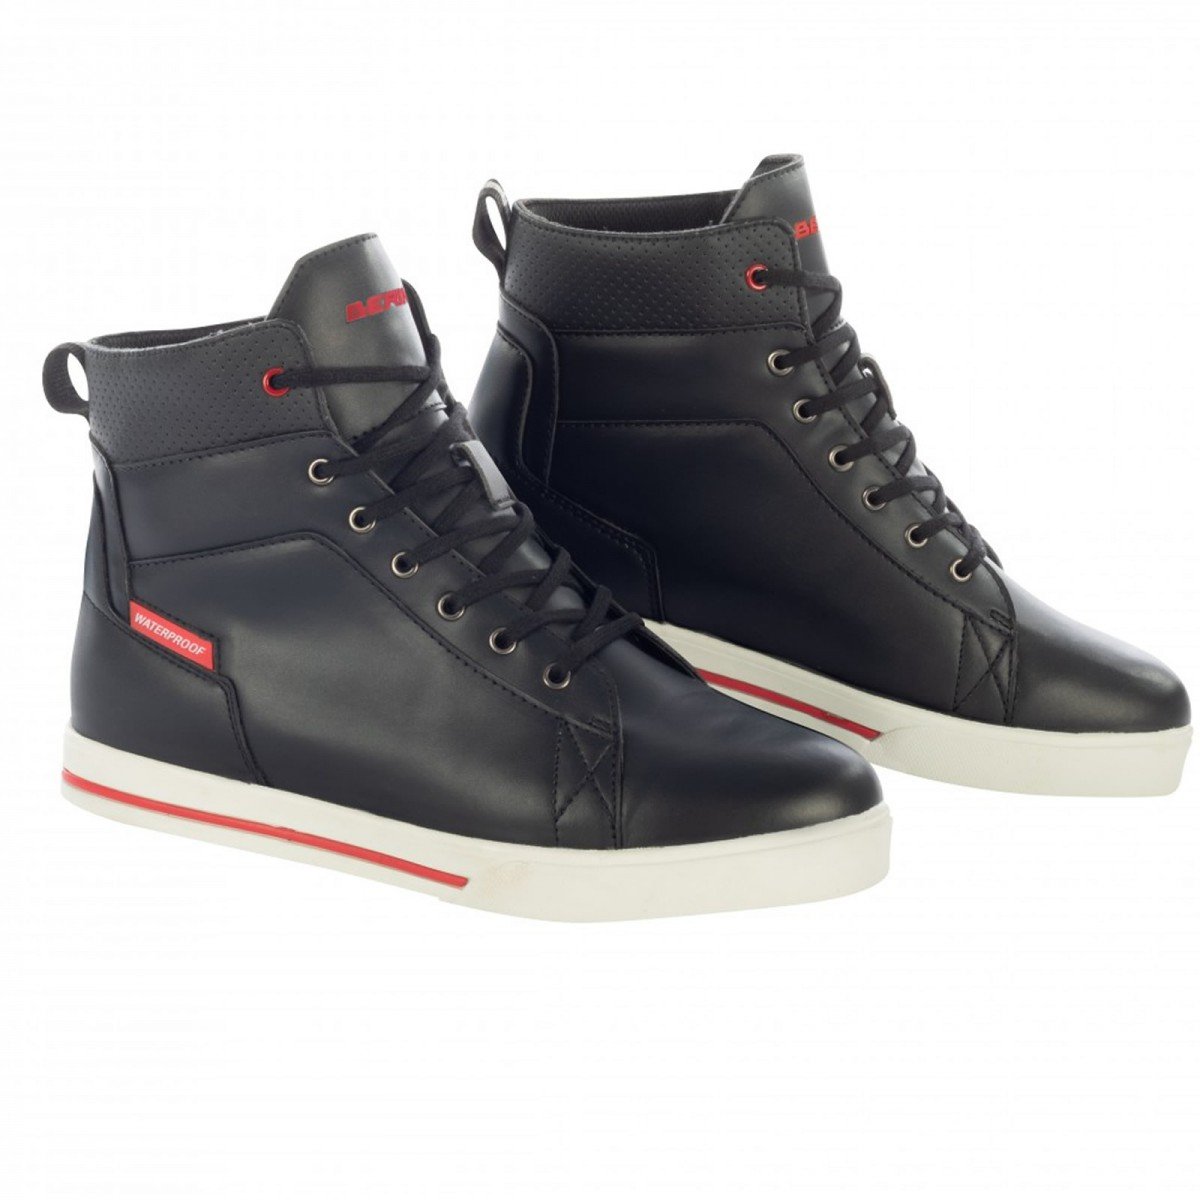 Image of Bering Sneakers Indy Black Red Size 46 EN